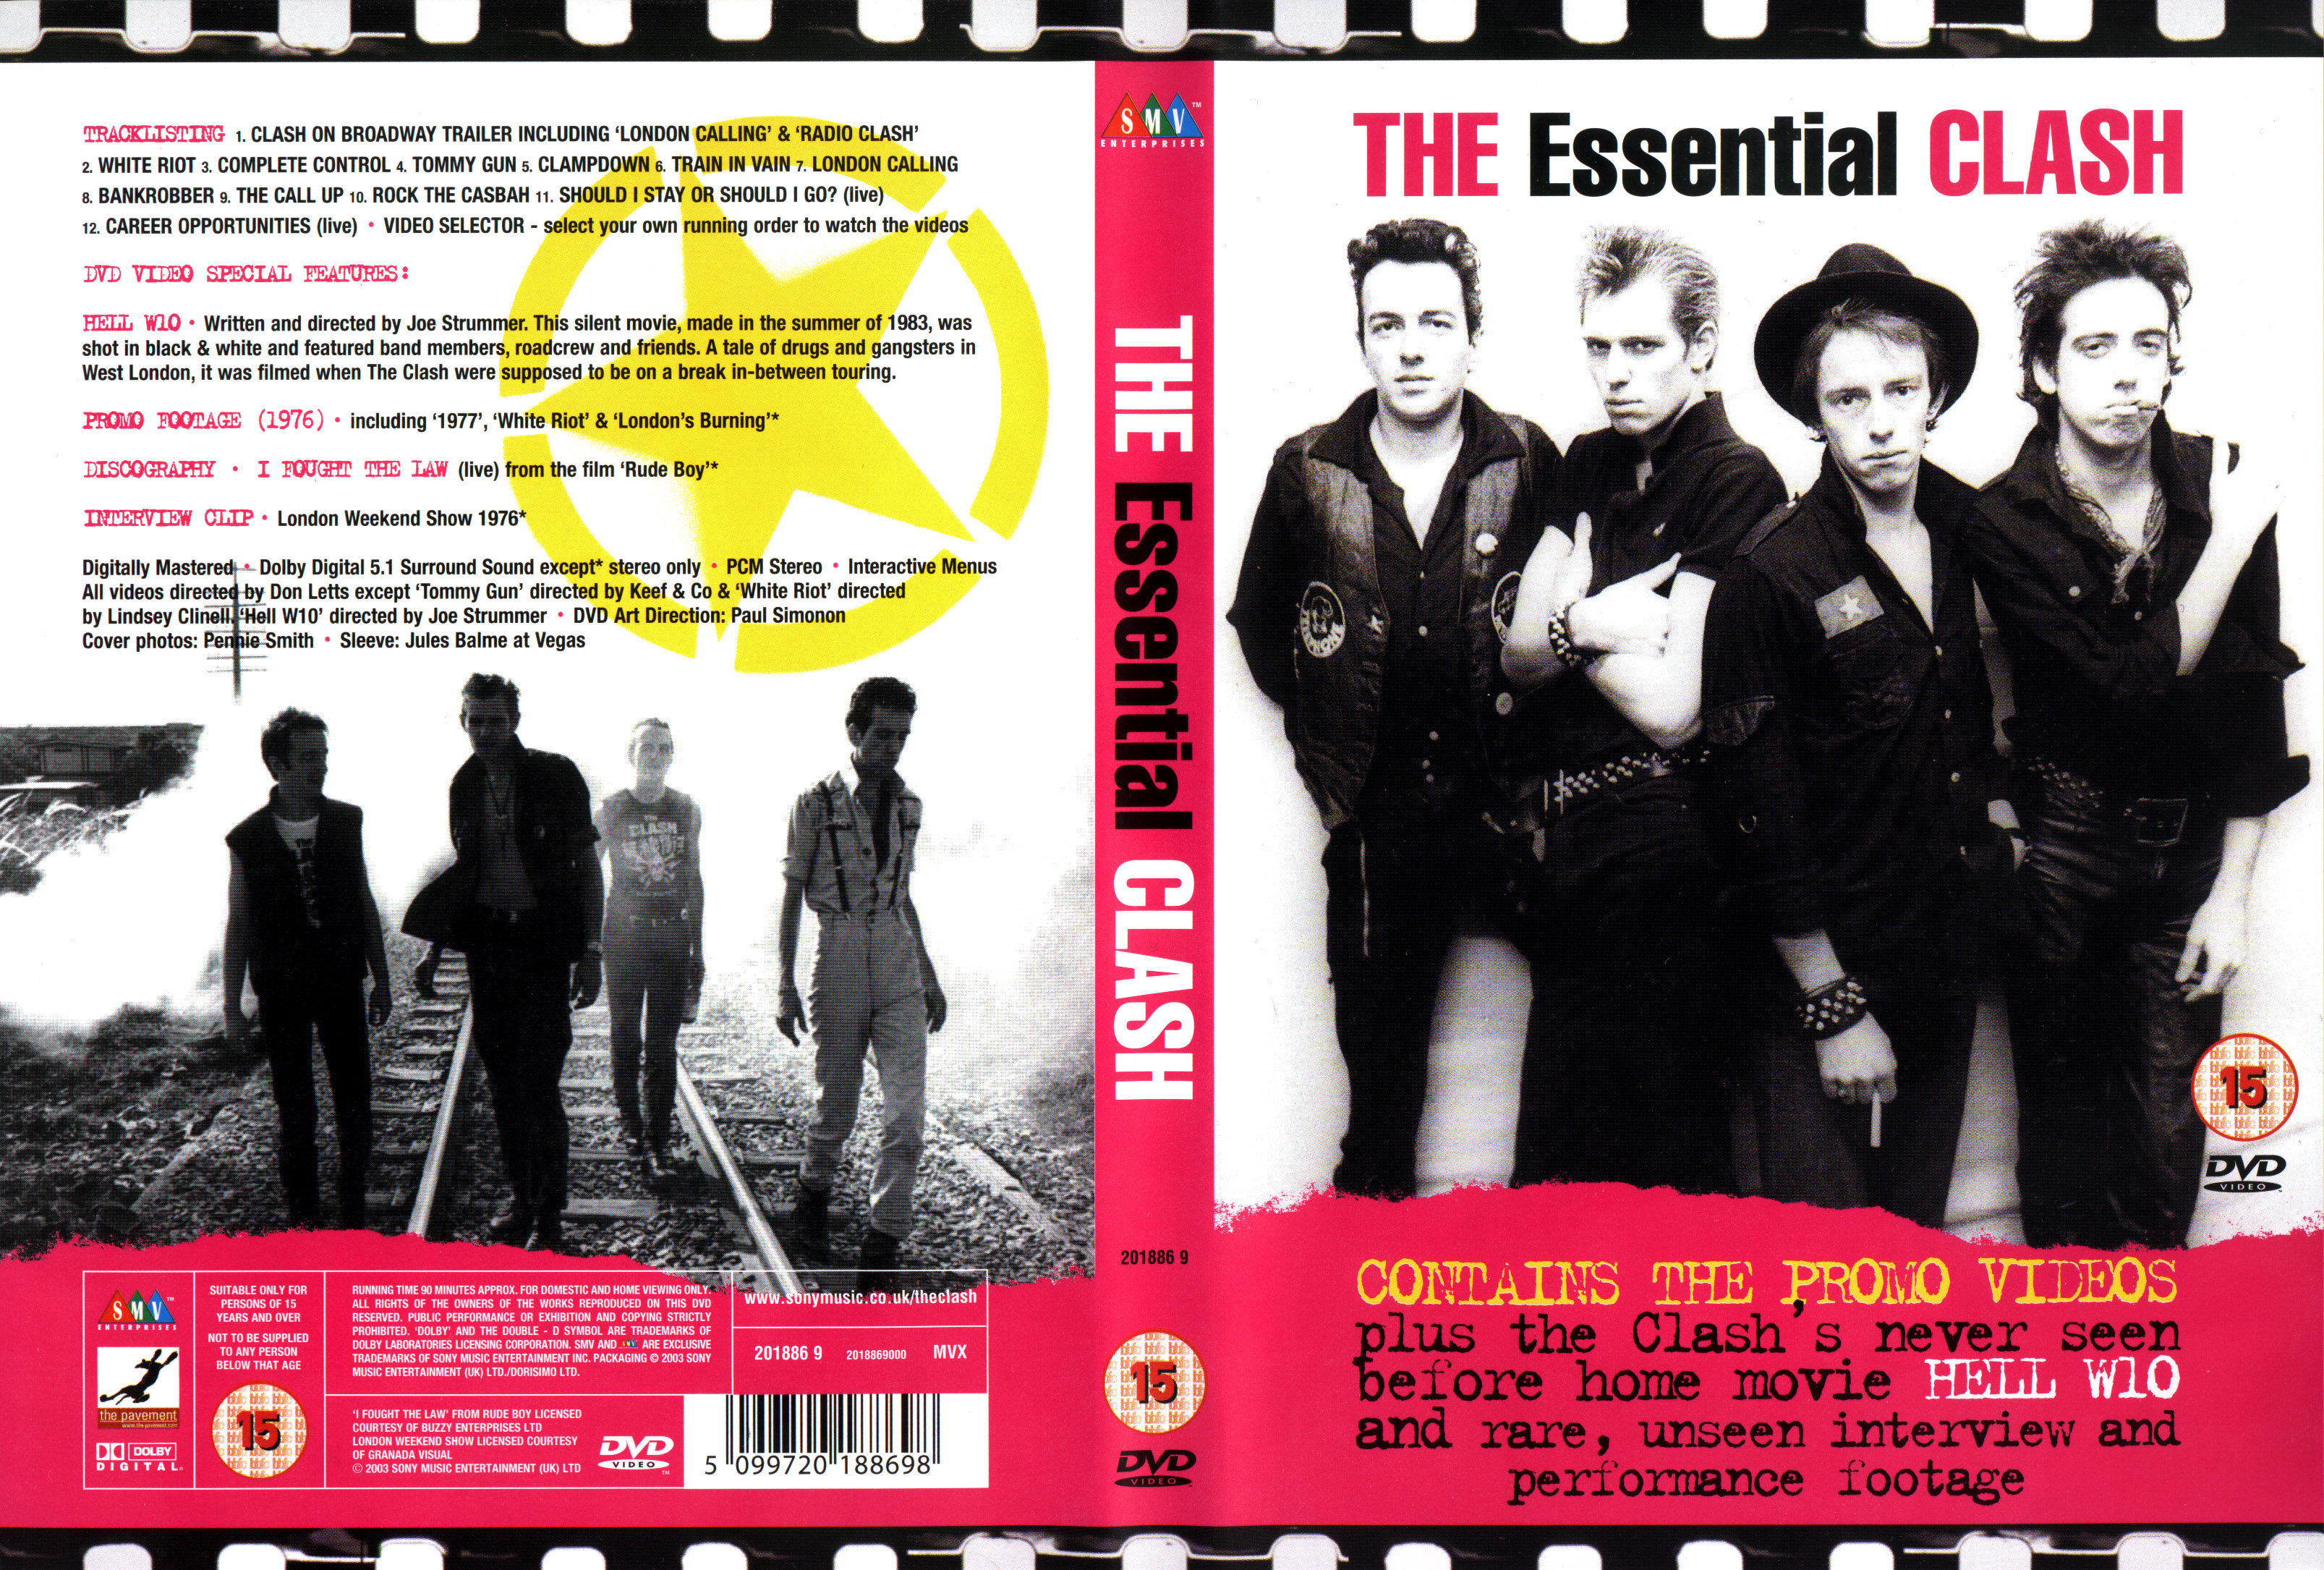 Jaquette DVD The essential Clash